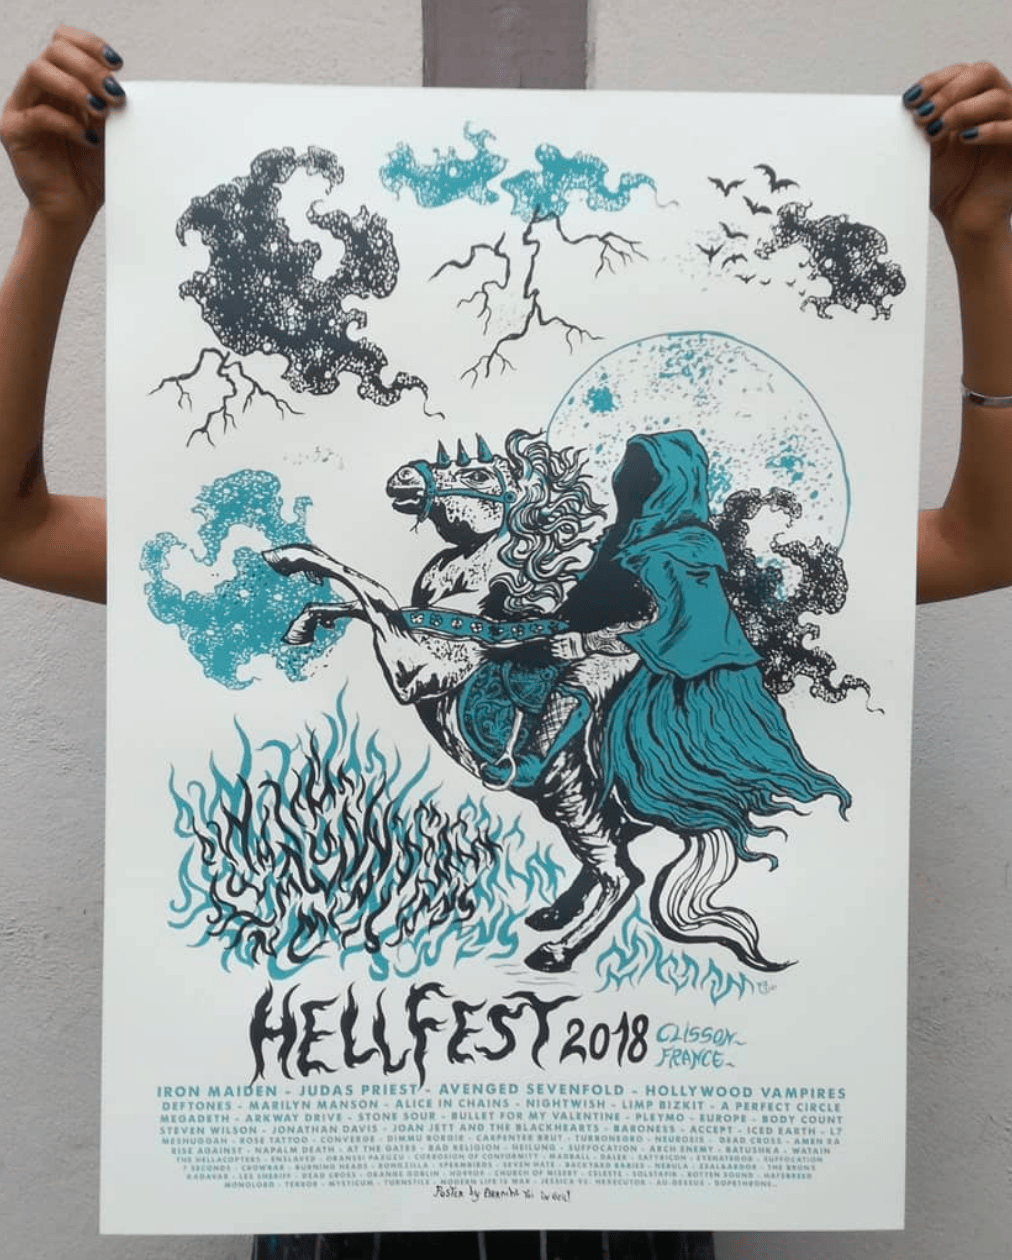 HELLFEST 2018 screenprinted poster